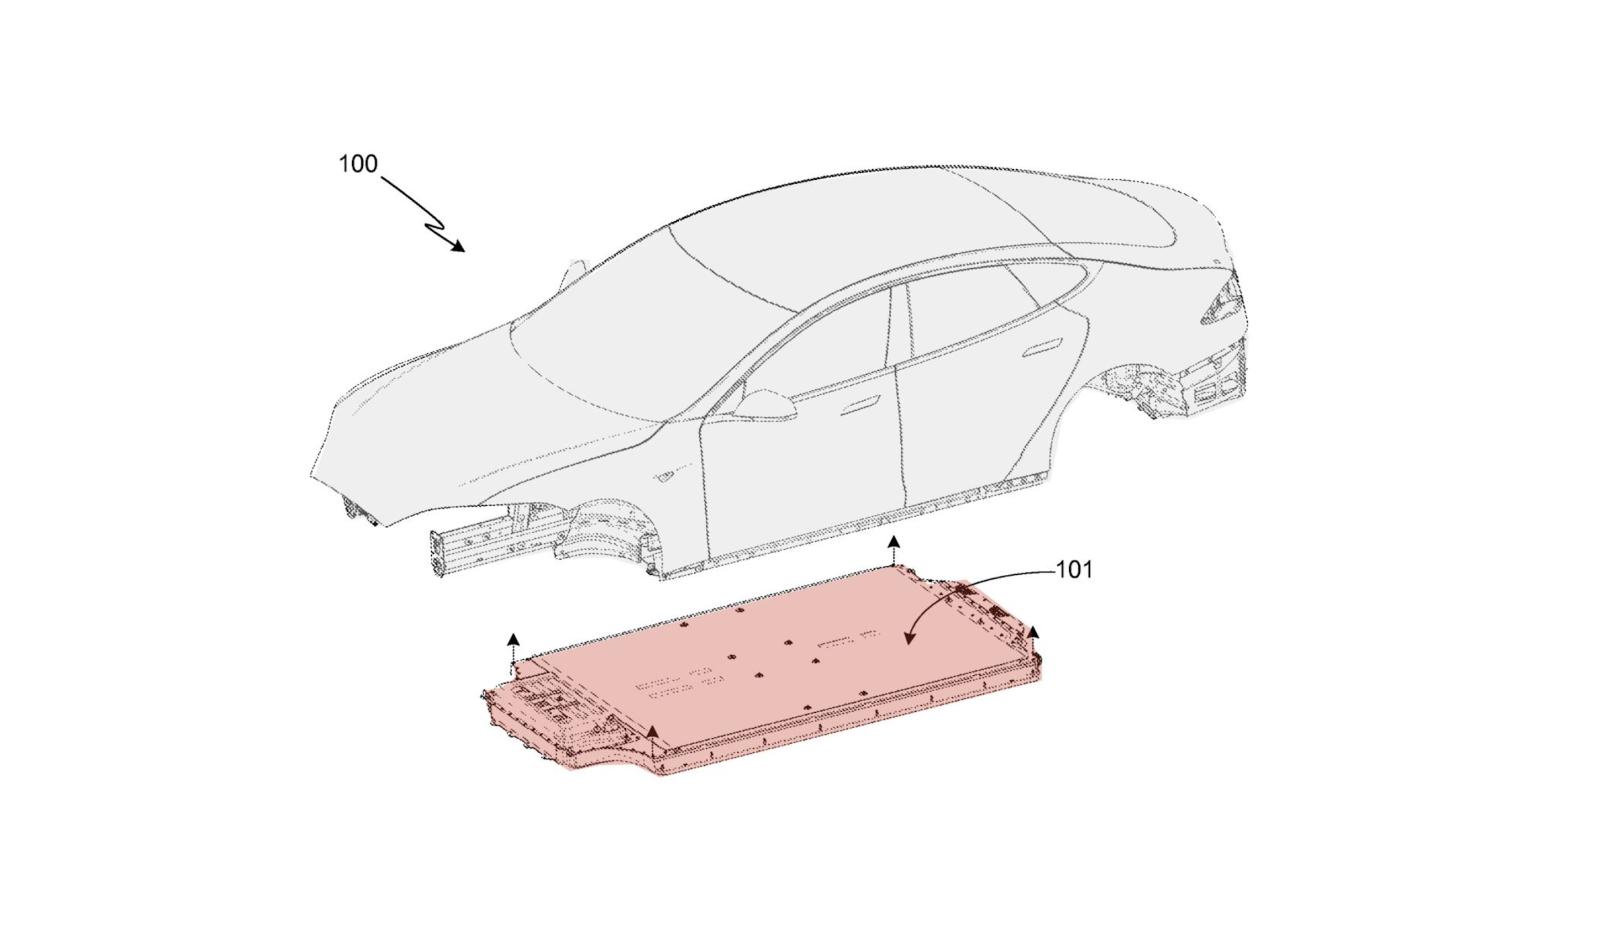 Vehicle battery pack ballistic shield, Tesla Inc 2011